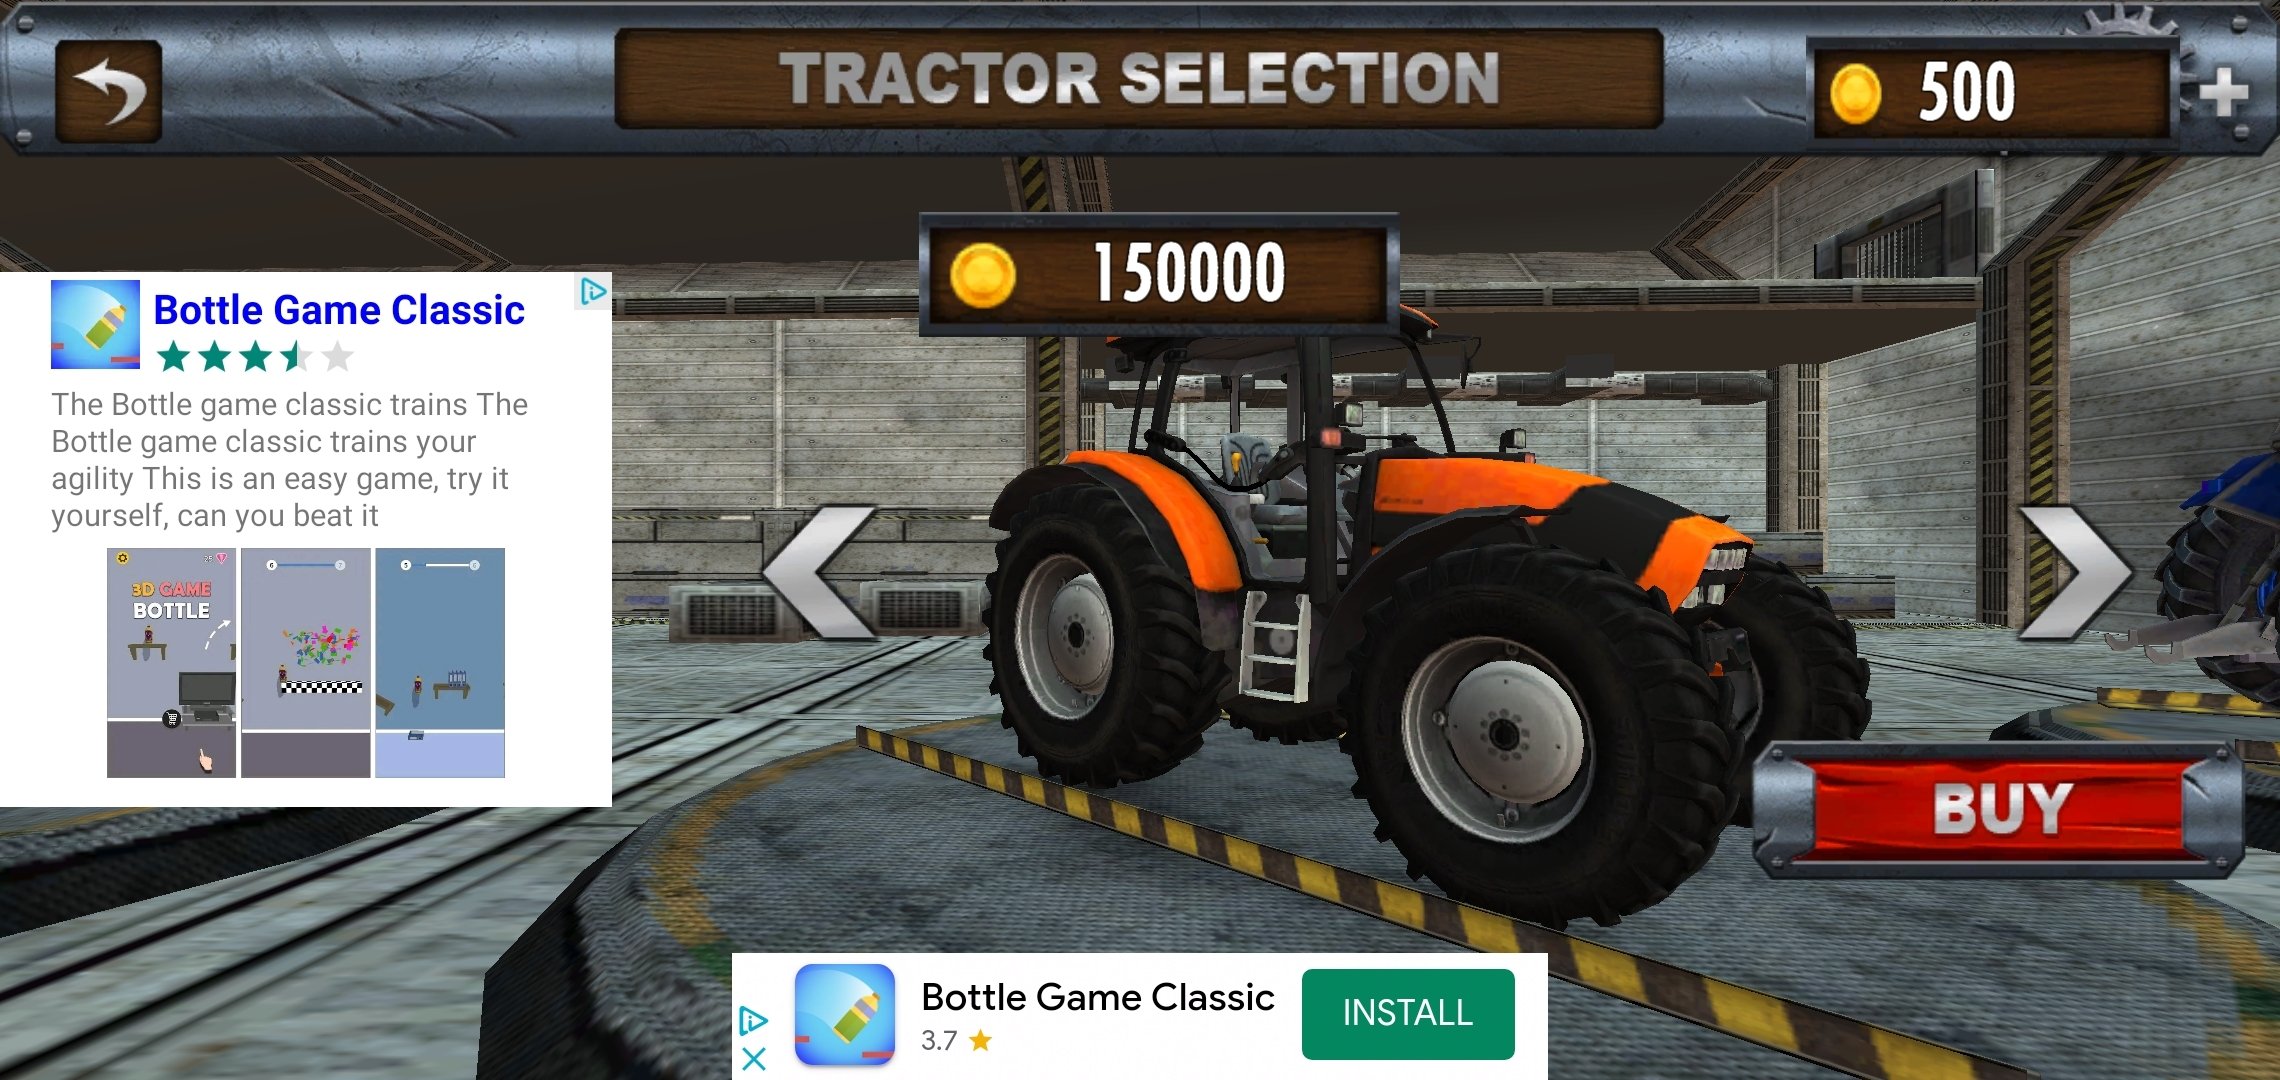 what tractors are in farming simulator 14 can dual attachments